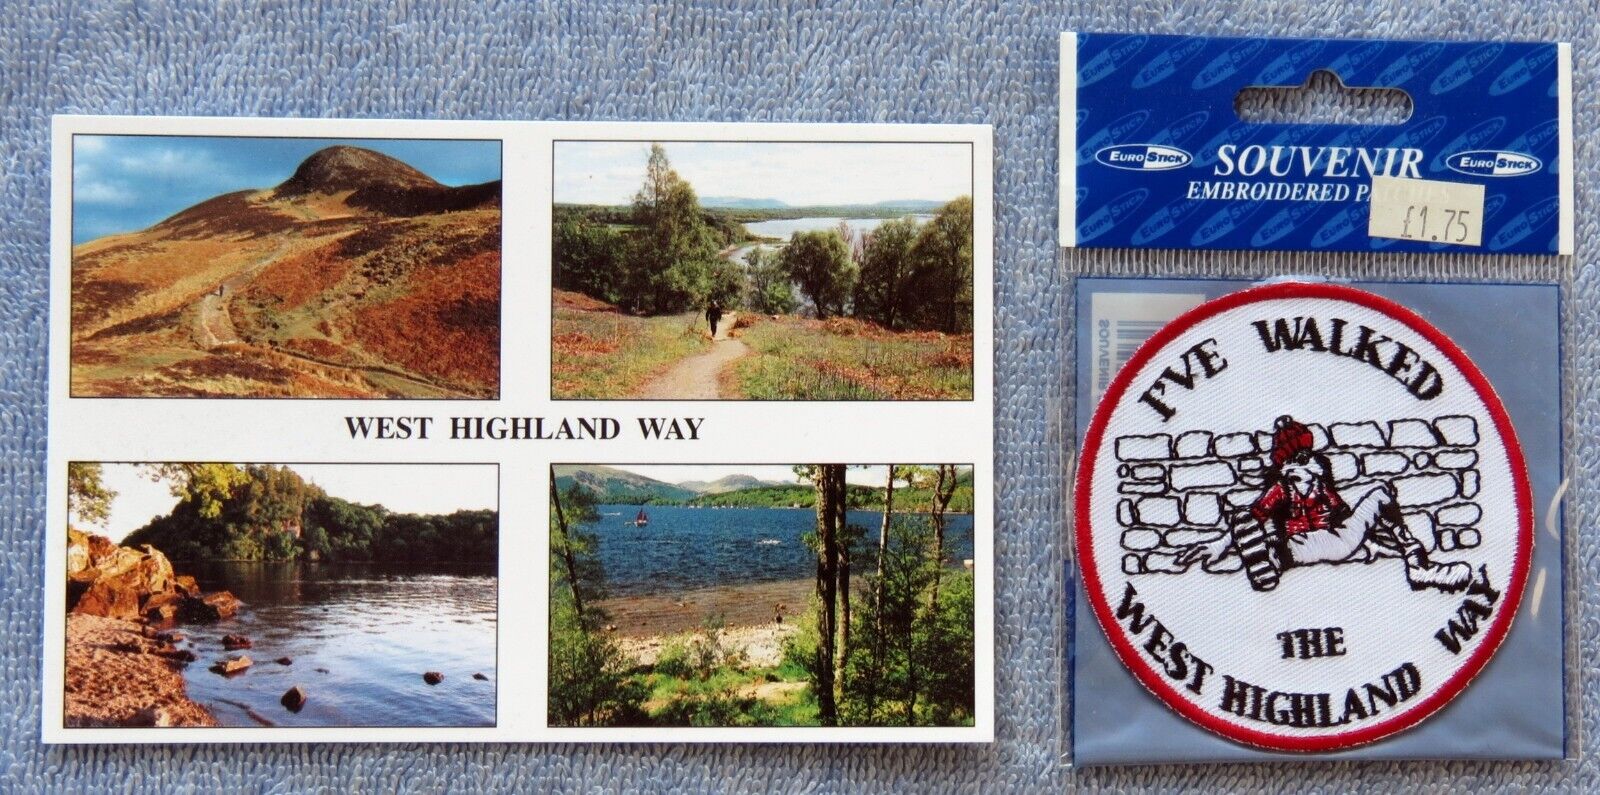 WEST HIGHLAND WAY - SCOTLAND Souvenir Emb. Patch & Postcard Not Addressed *MINT* Без бренда